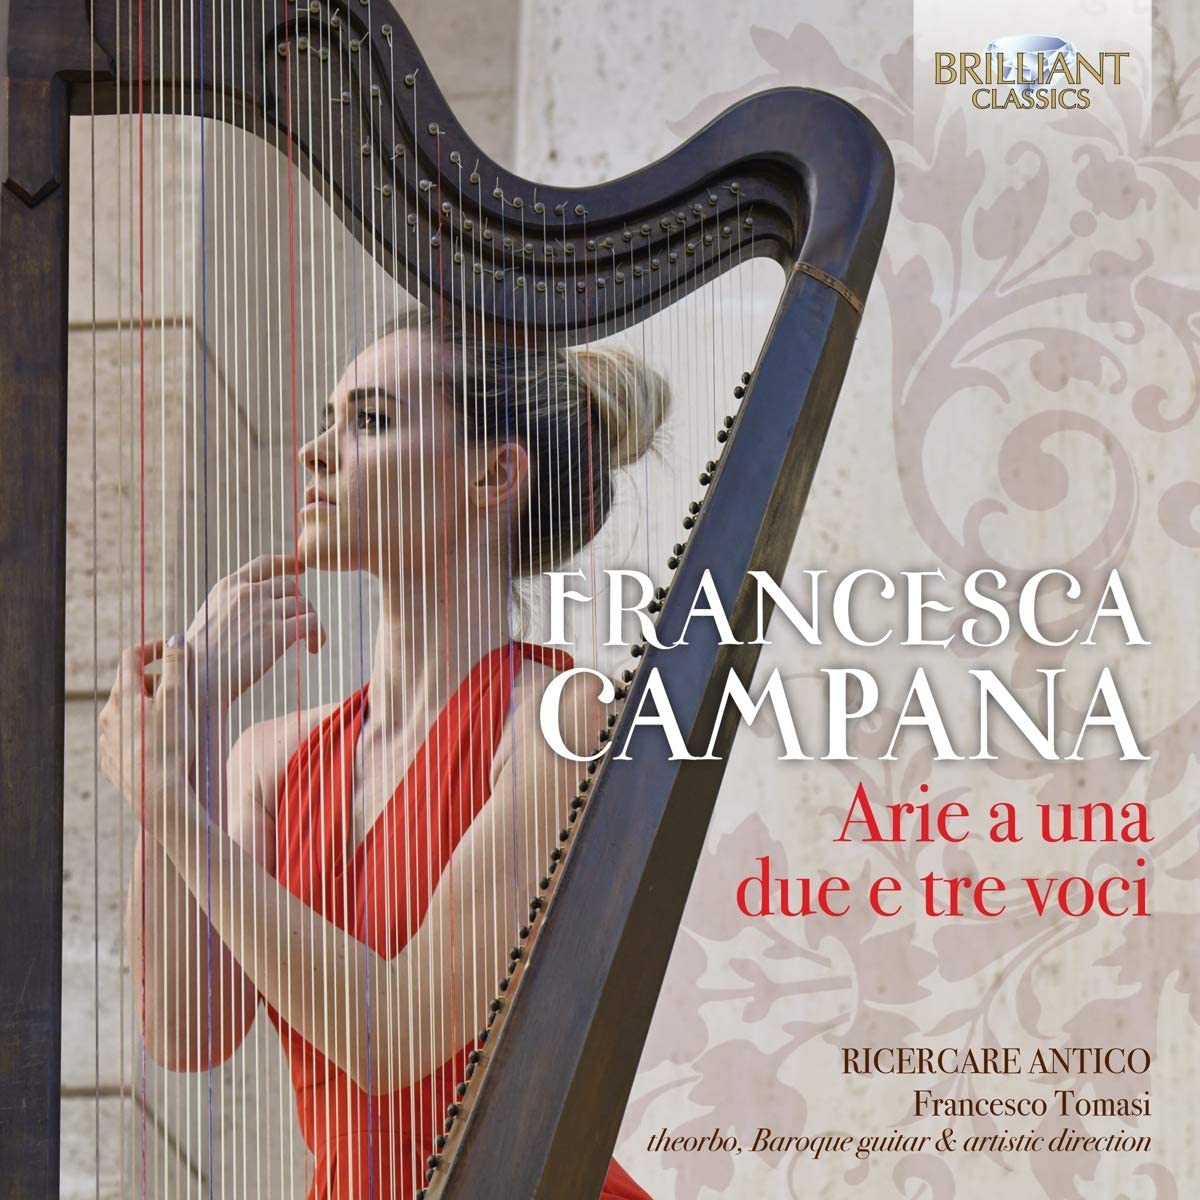 CD cover of Campana Arie Ricercare Antico Brilliant Classics